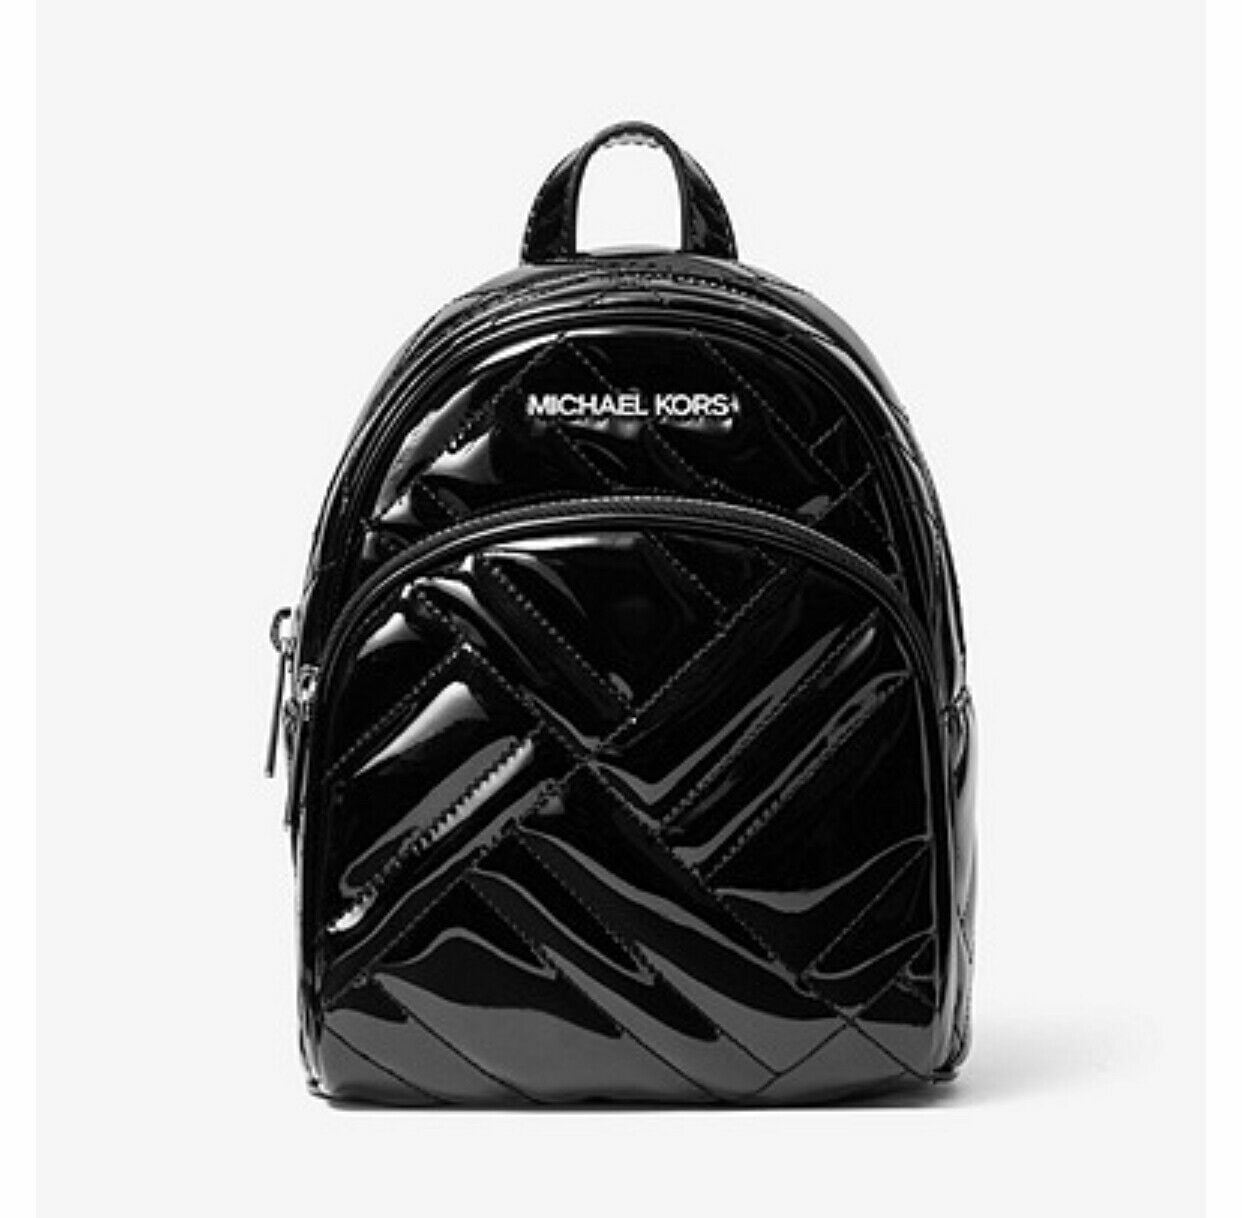 michael kors small black backpack